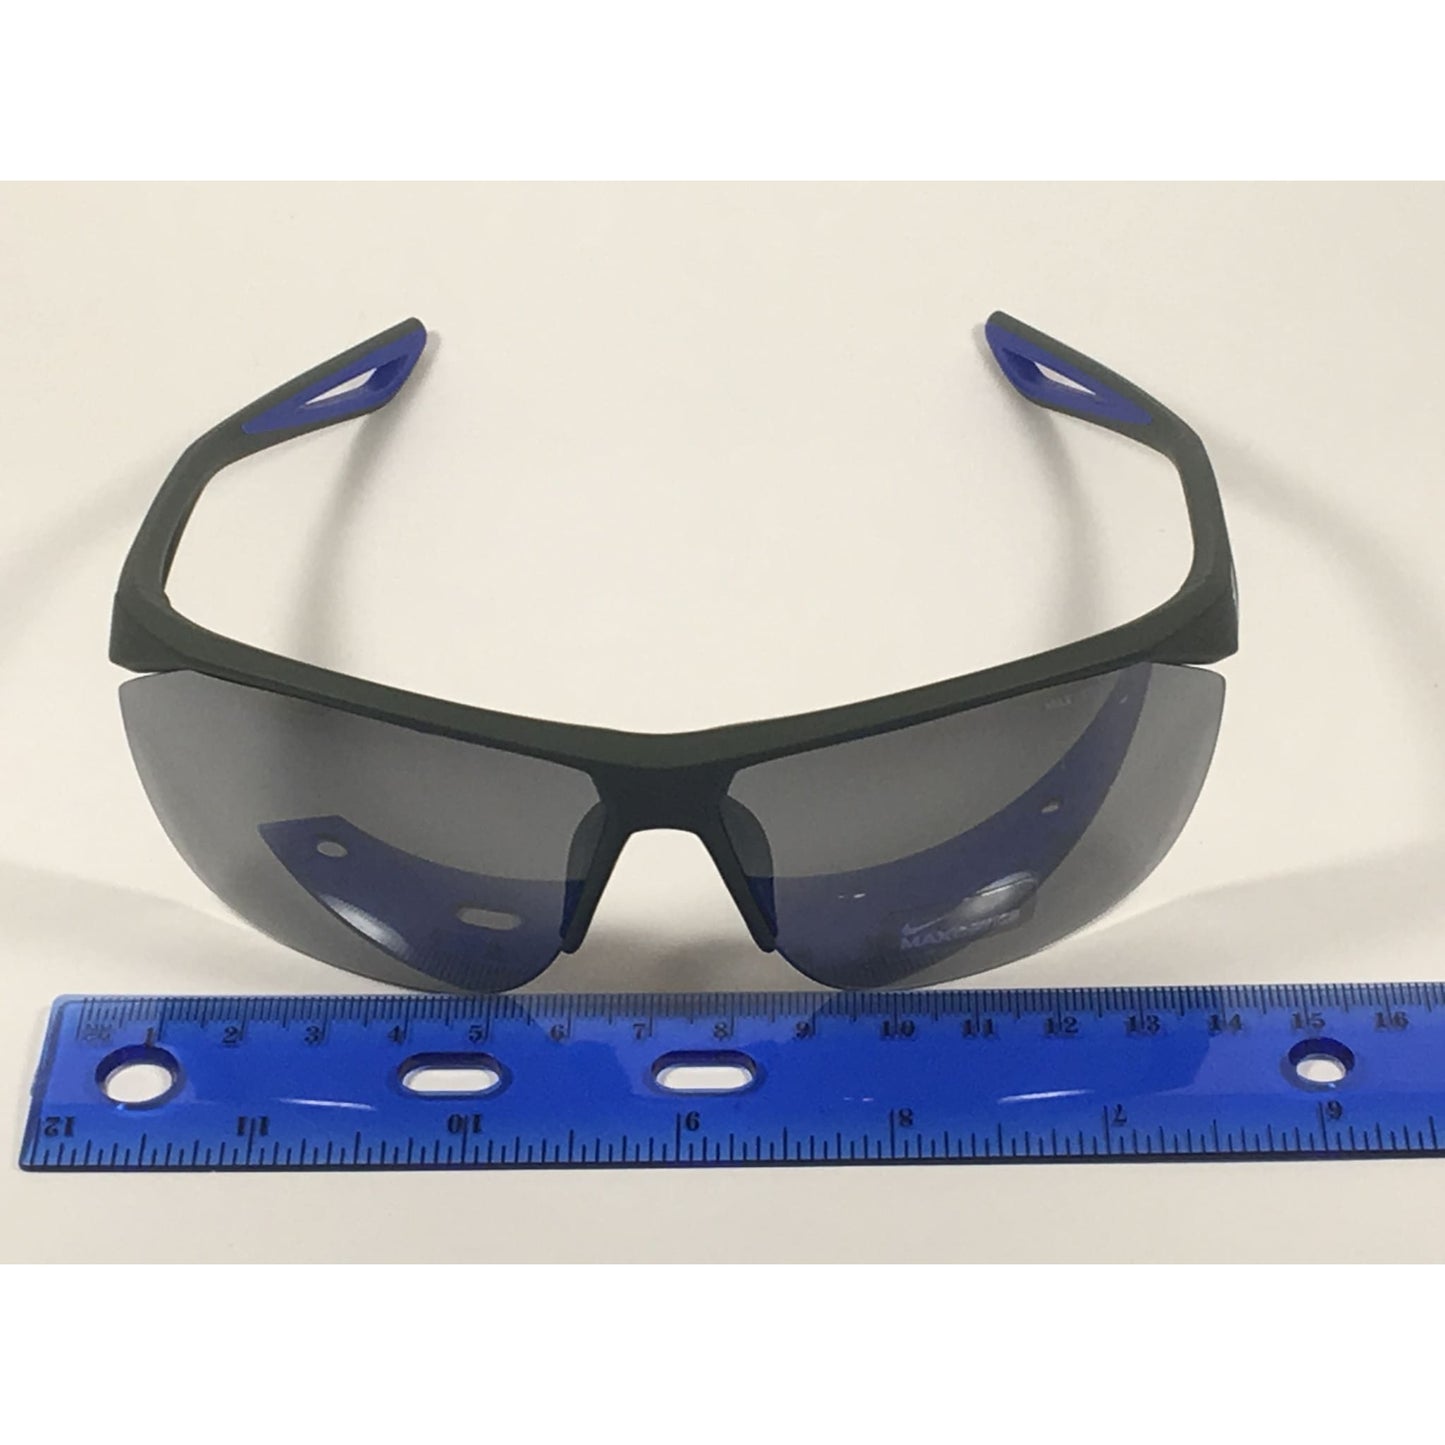 Nike Tailwind Sport Sunglasses EV0915 310 416 Graphite Gray Blue Frame Gray Mirror Lens - Sunglasses